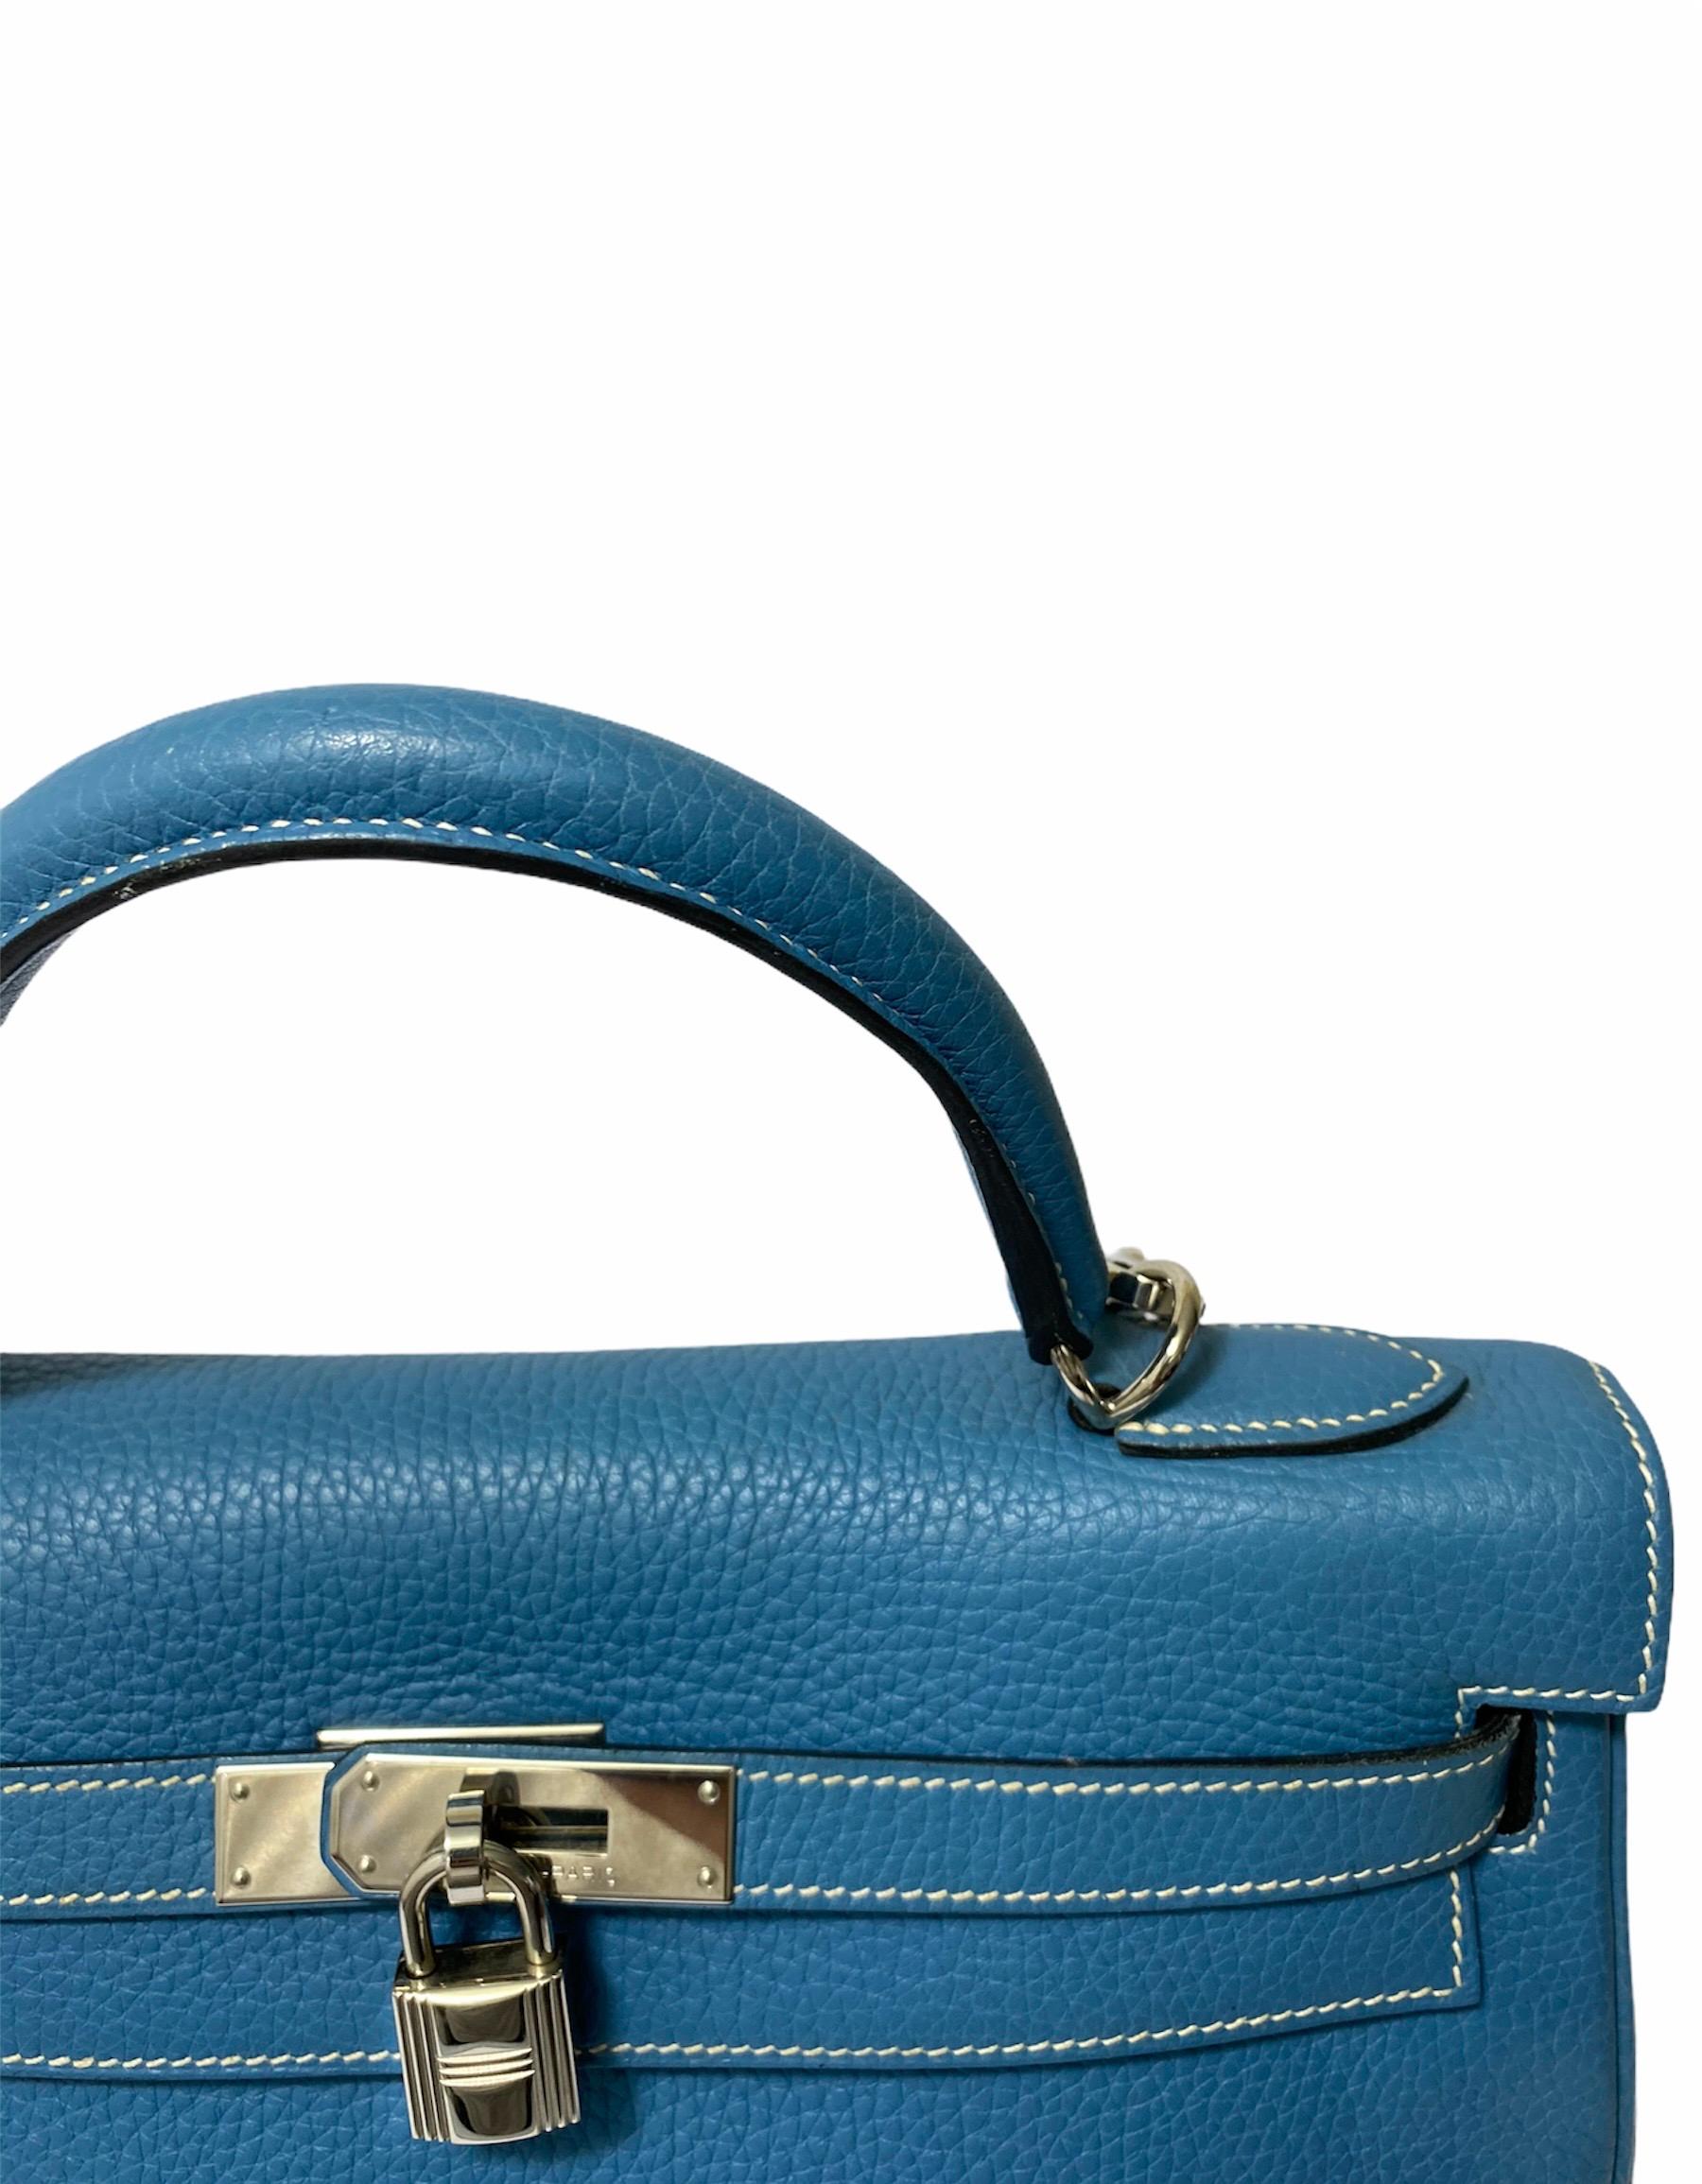 2006 Hermès Blue Jean Togo Kelly 32 Bag 6